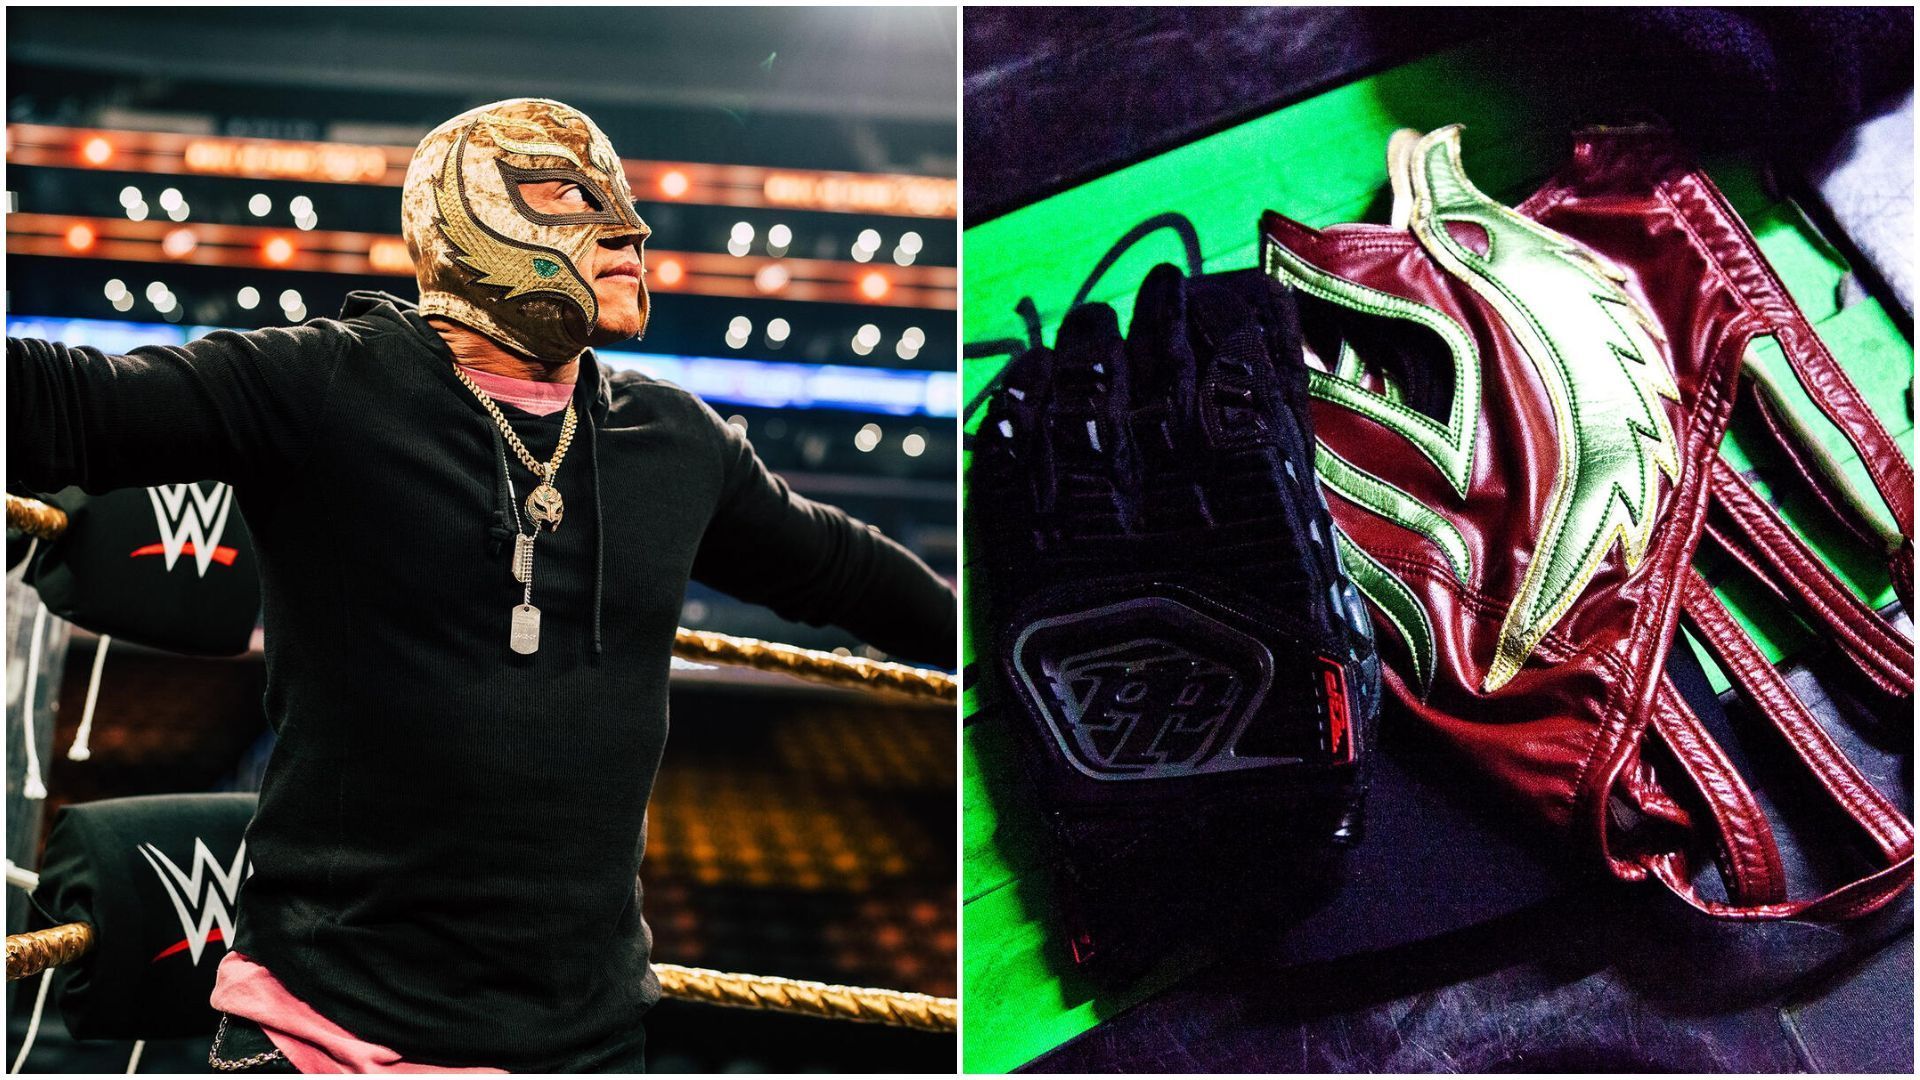 Rey Mysterio is a WWE Hall of Famer. [Image credits - WWE.com]